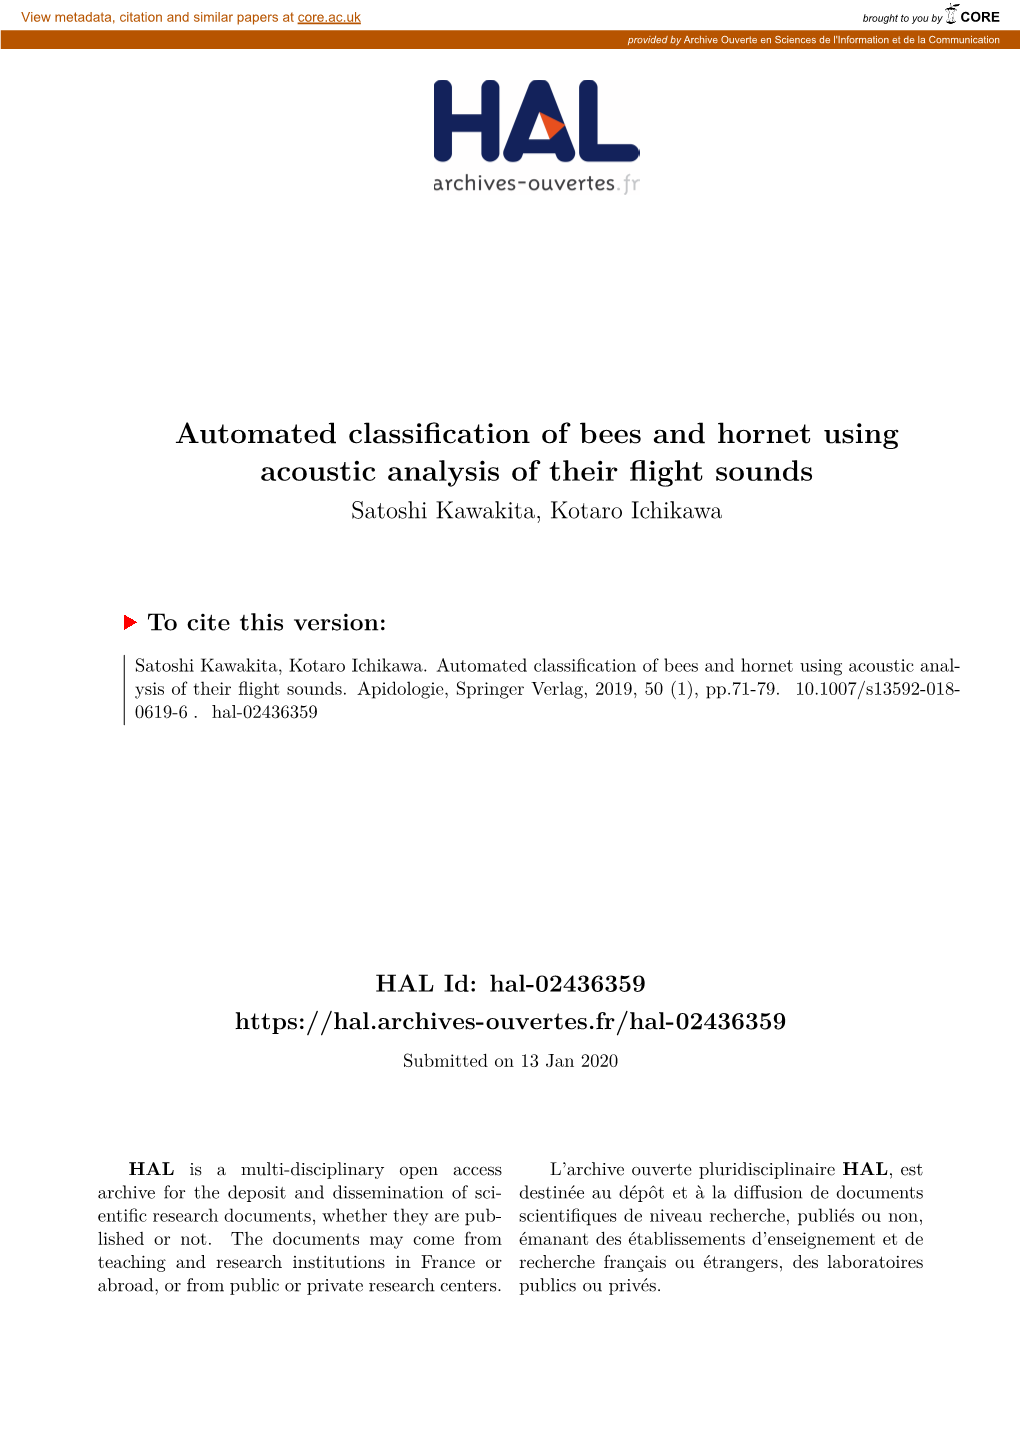 Automated Classification of Bees and Hornet Using Acoustic Analysis of Their Flight Sounds Satoshi Kawakita, Kotaro Ichikawa